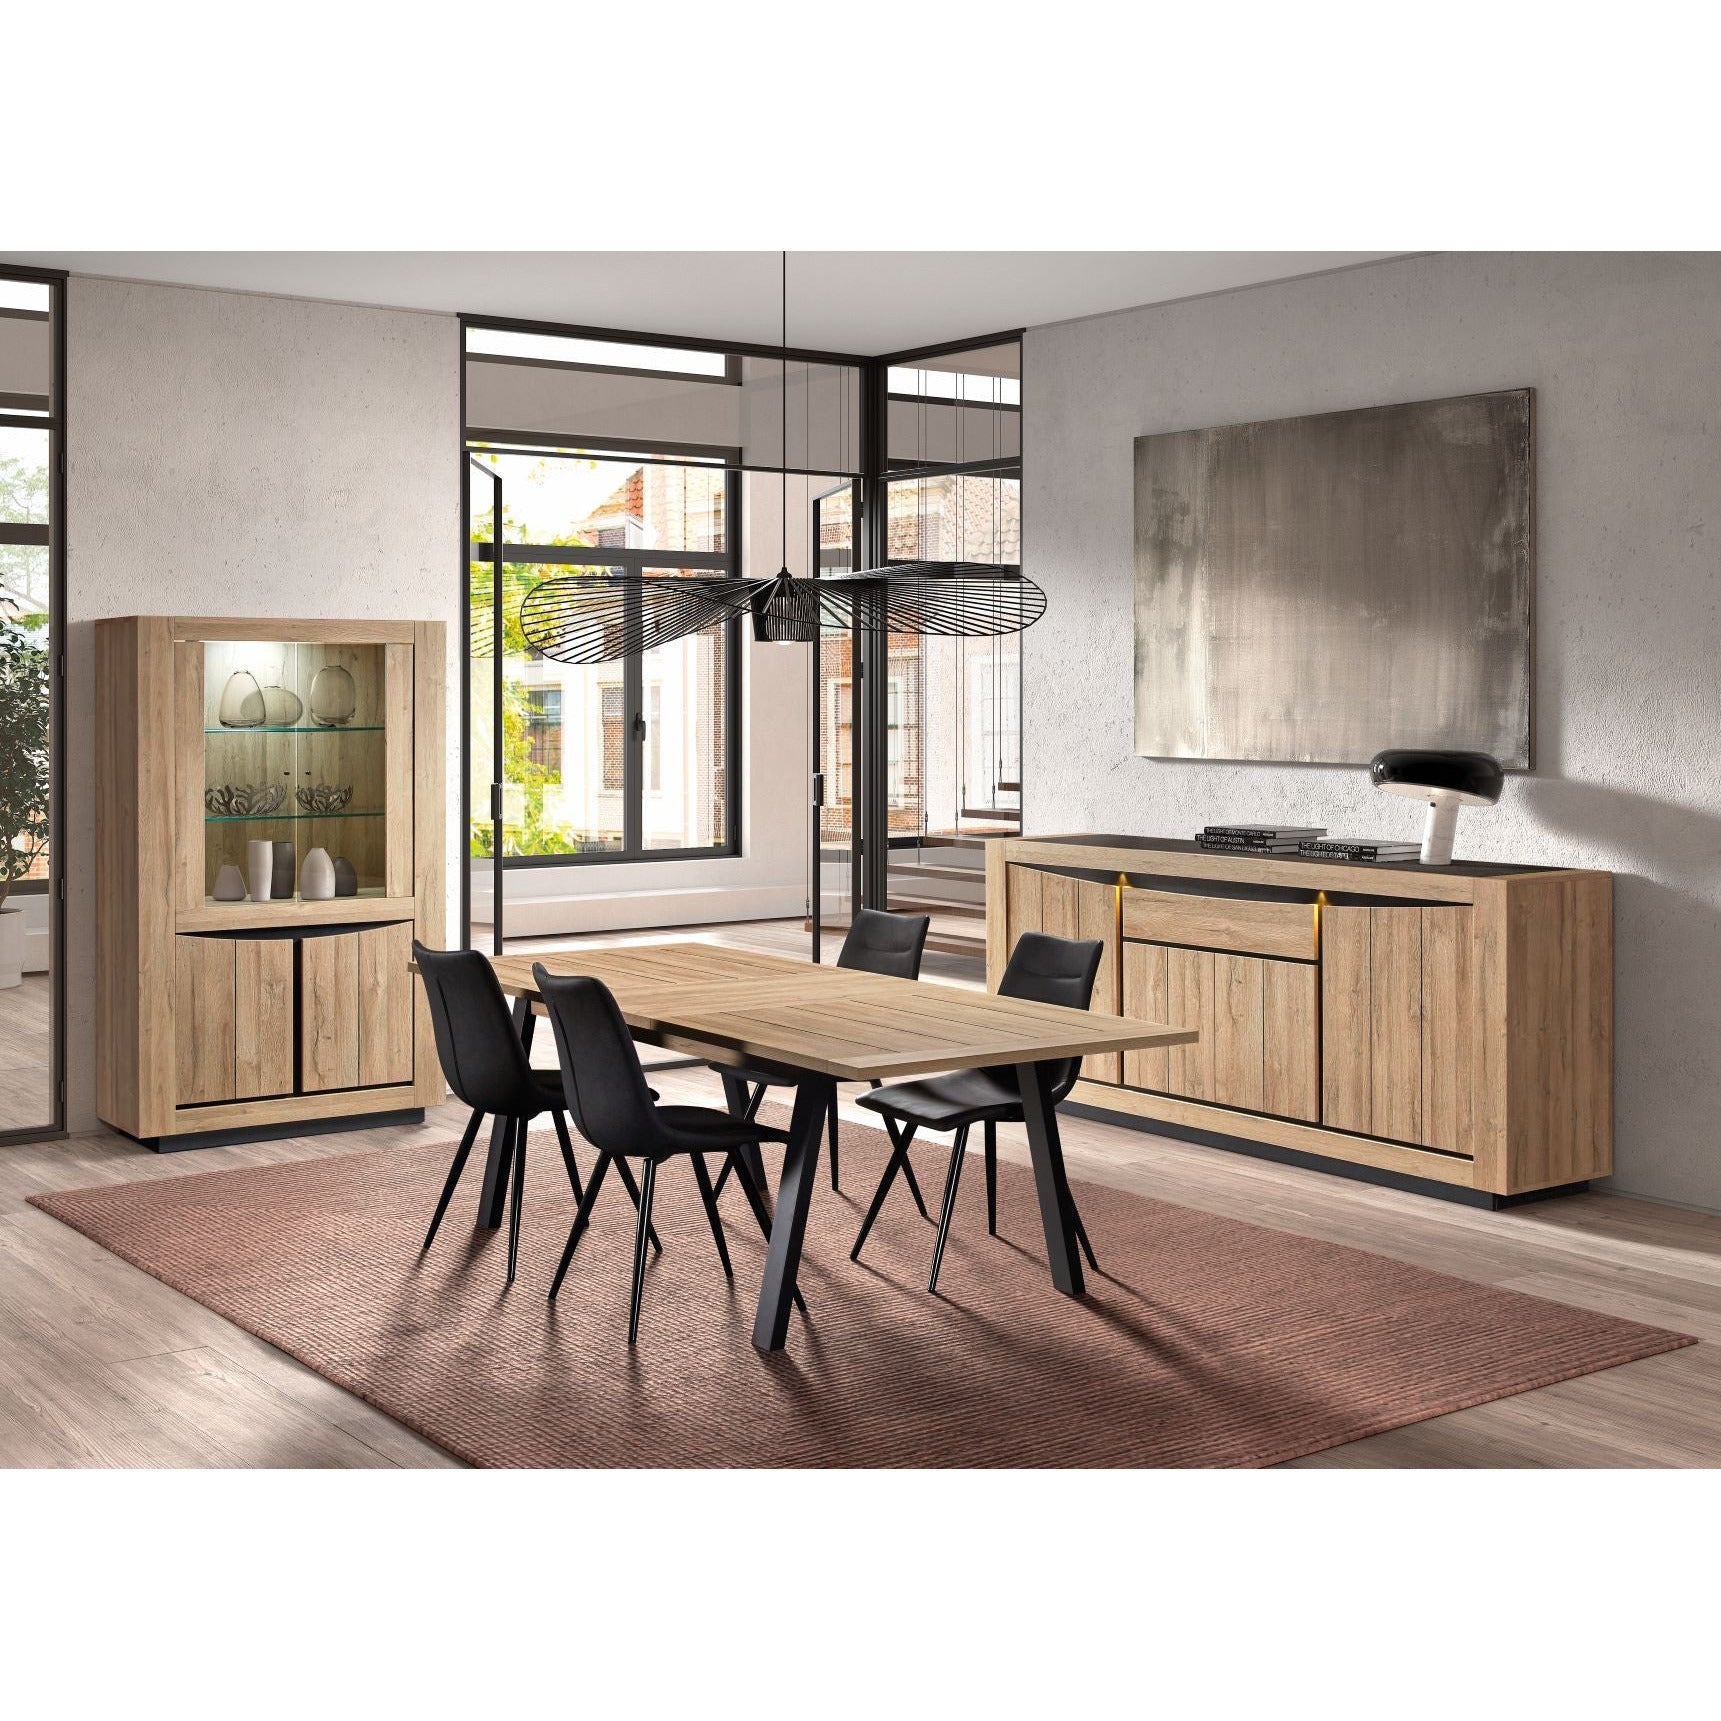 Table | Furniture series Fugue | Natural, gray, brown | 180x100